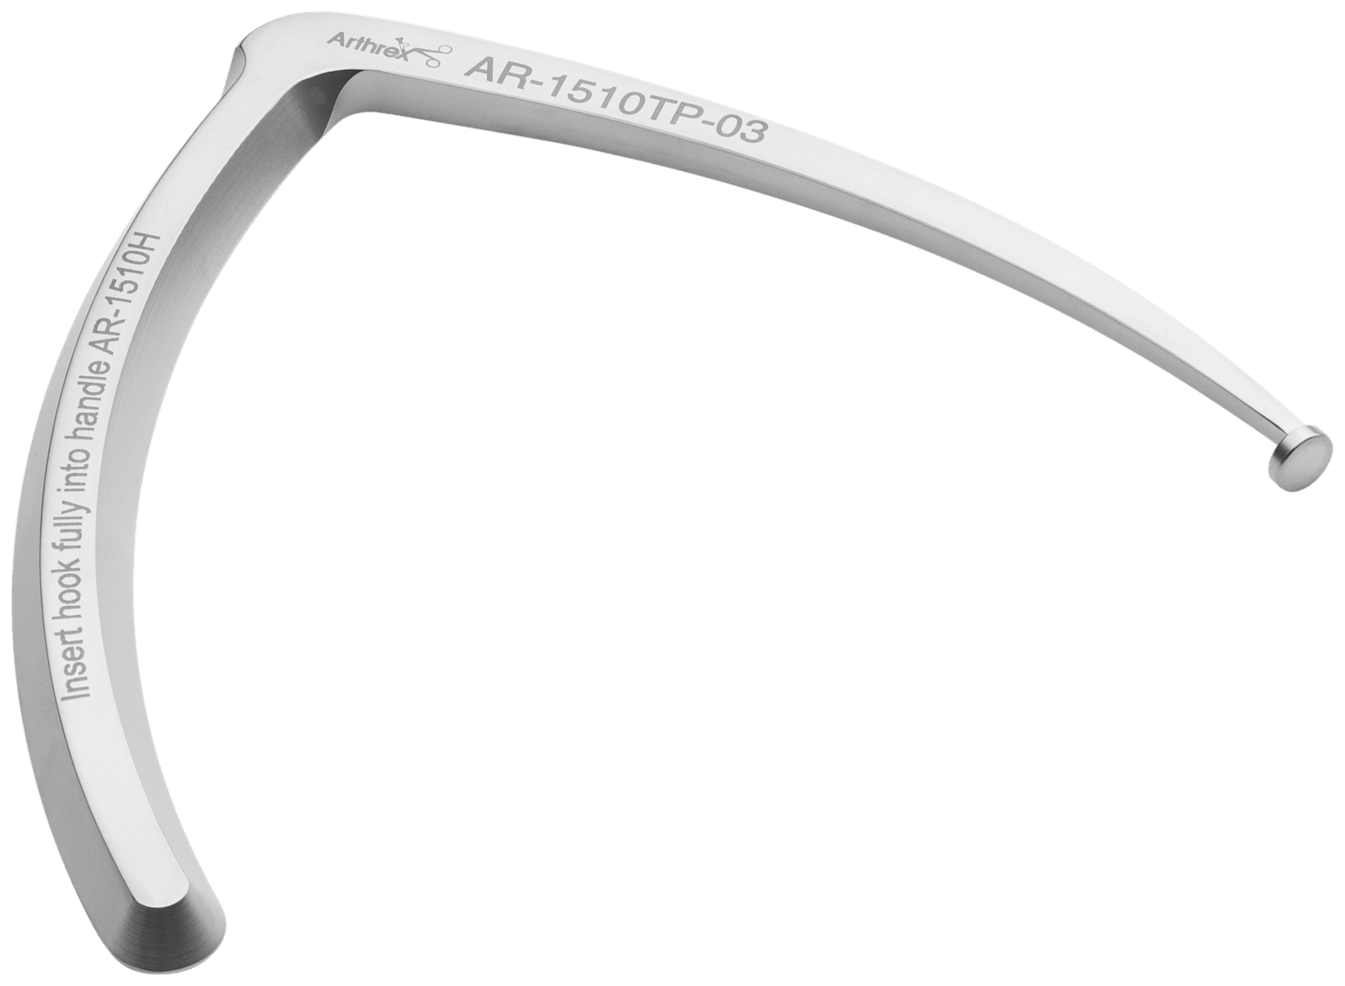 Marking Hook for Trochleoplasty, 3 mm offset